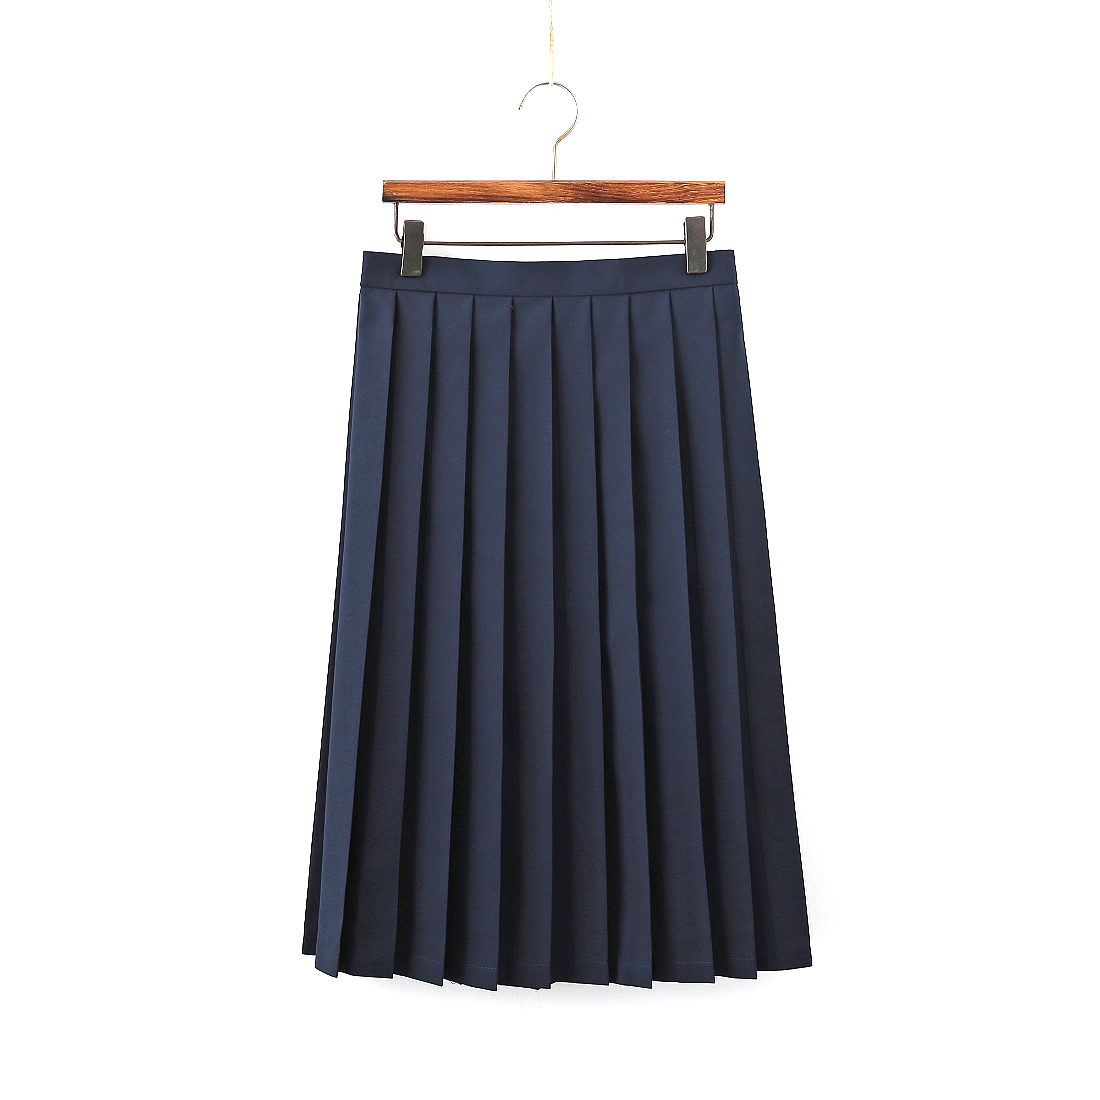 Navy blue, medium length skirt (65cm)